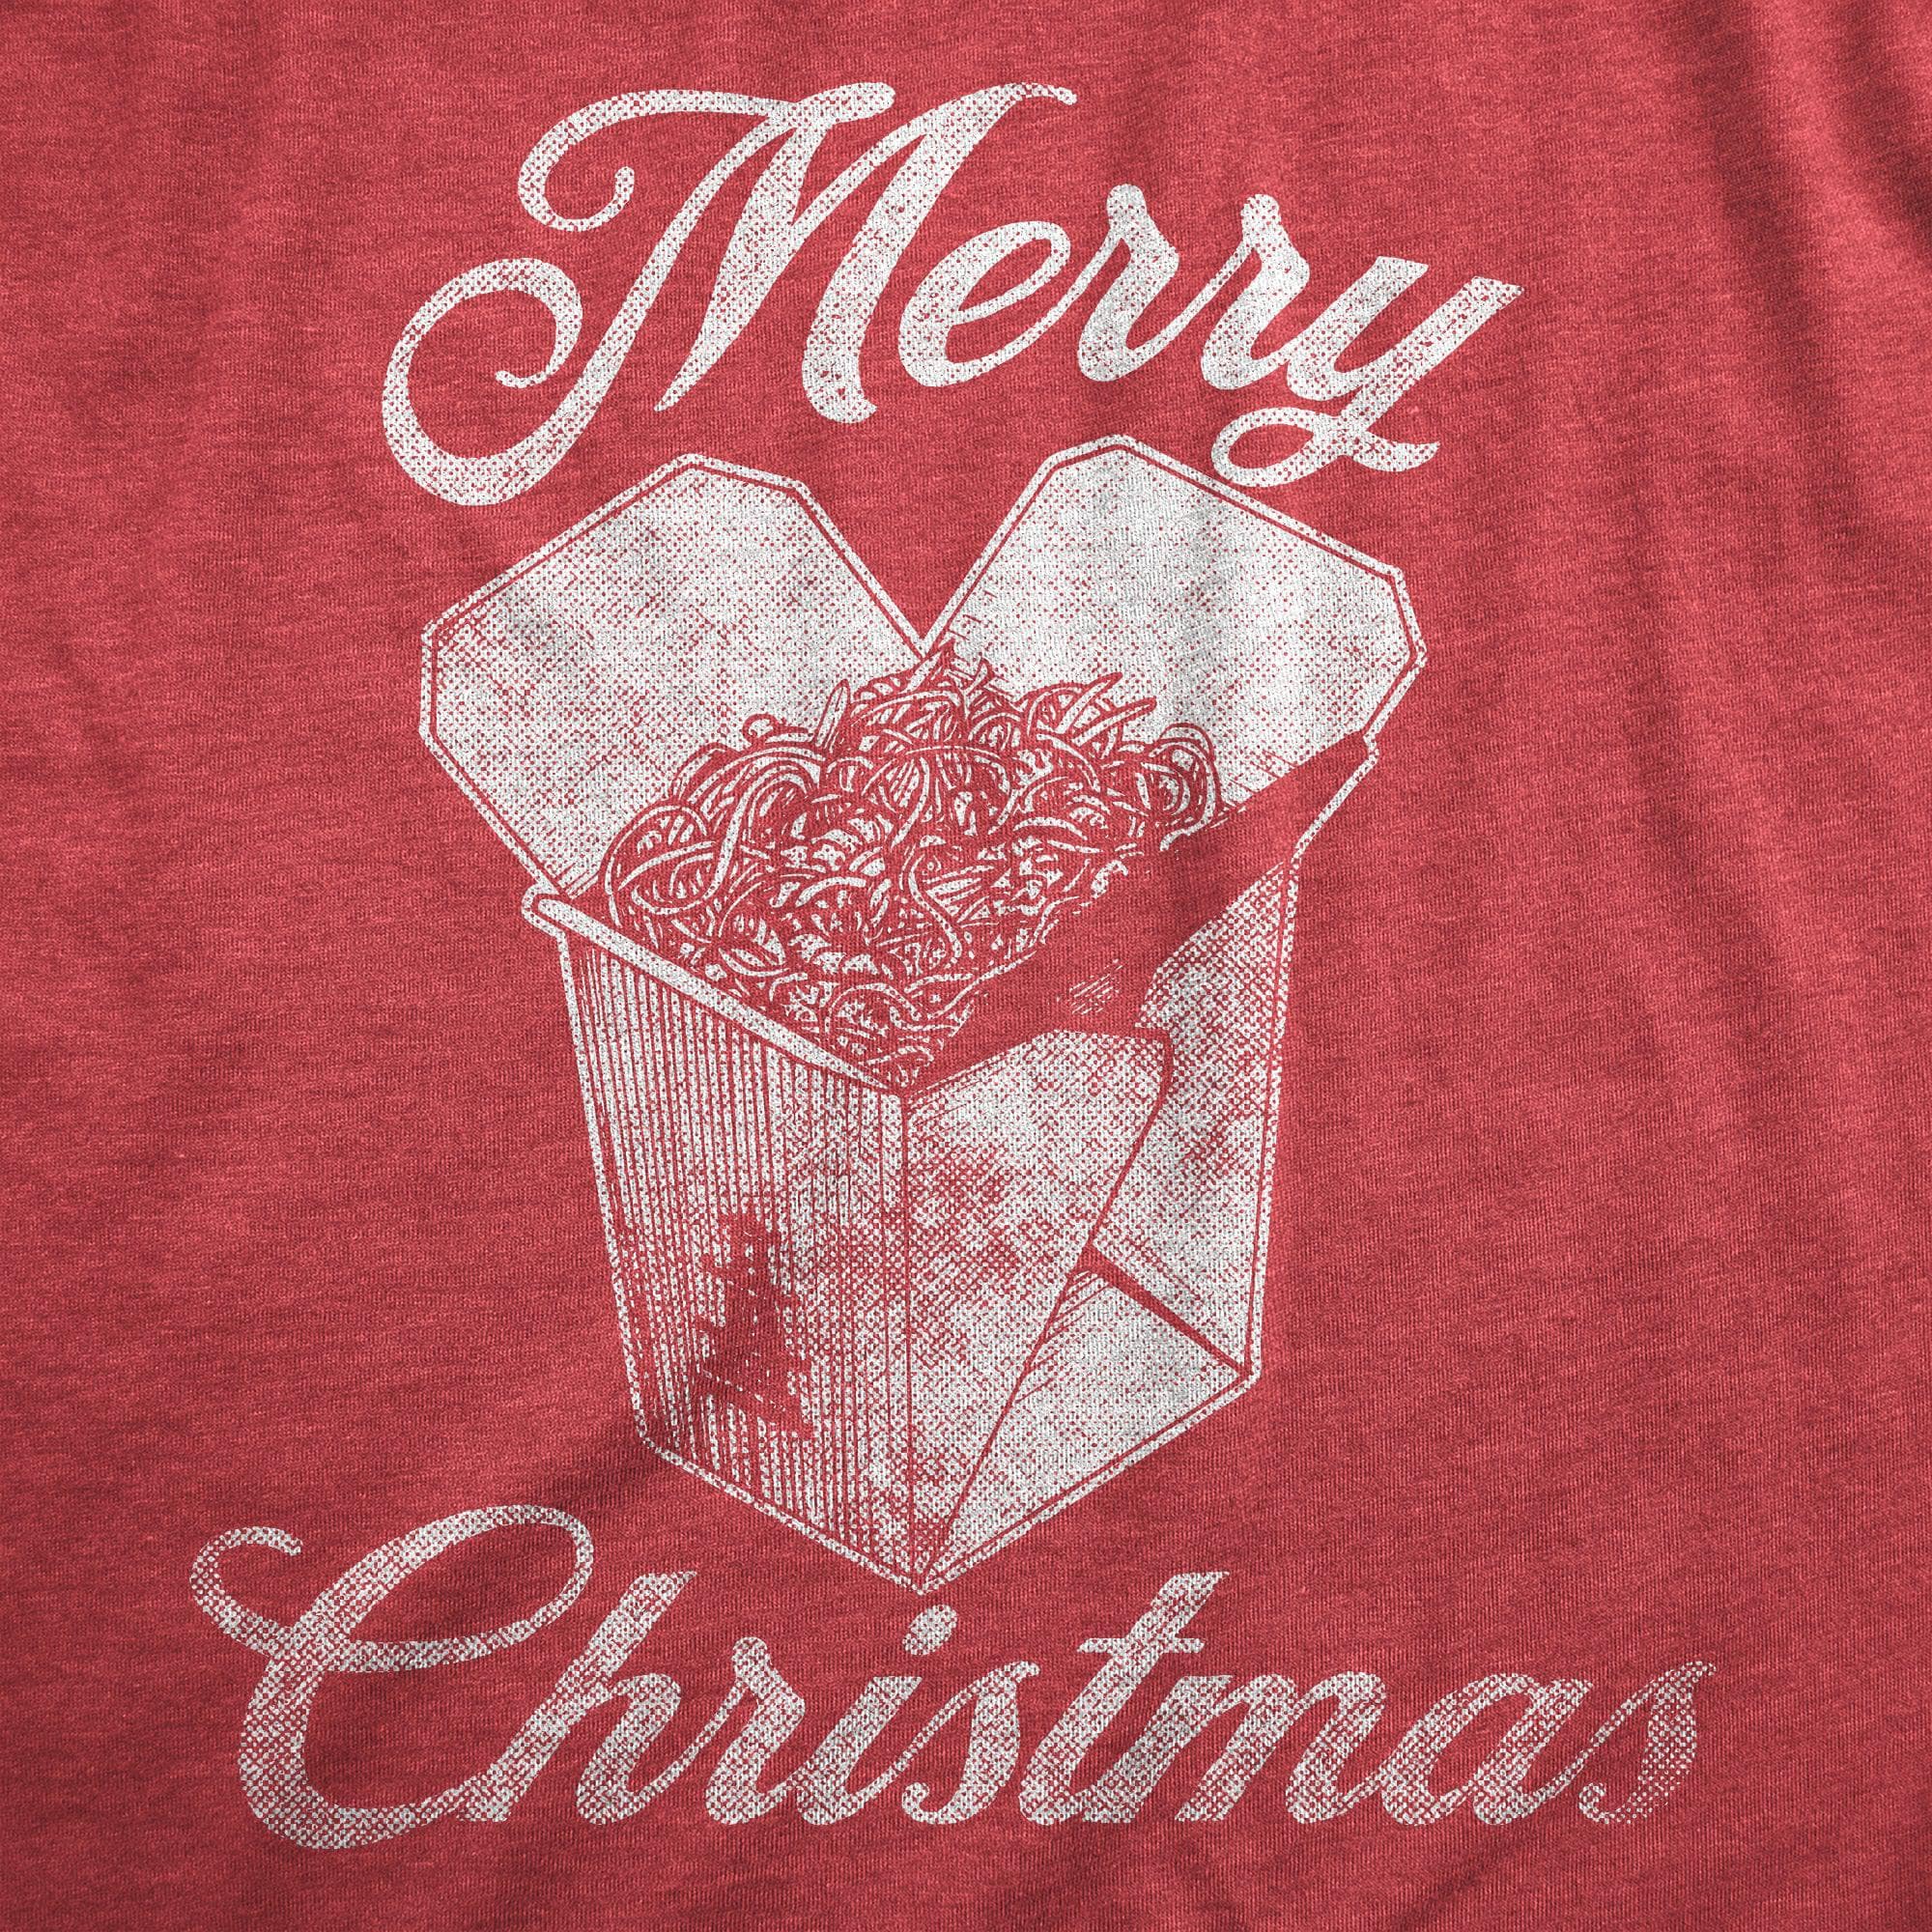 Merry Christmas Takeout Women's Tshirt  -  Crazy Dog T-Shirts